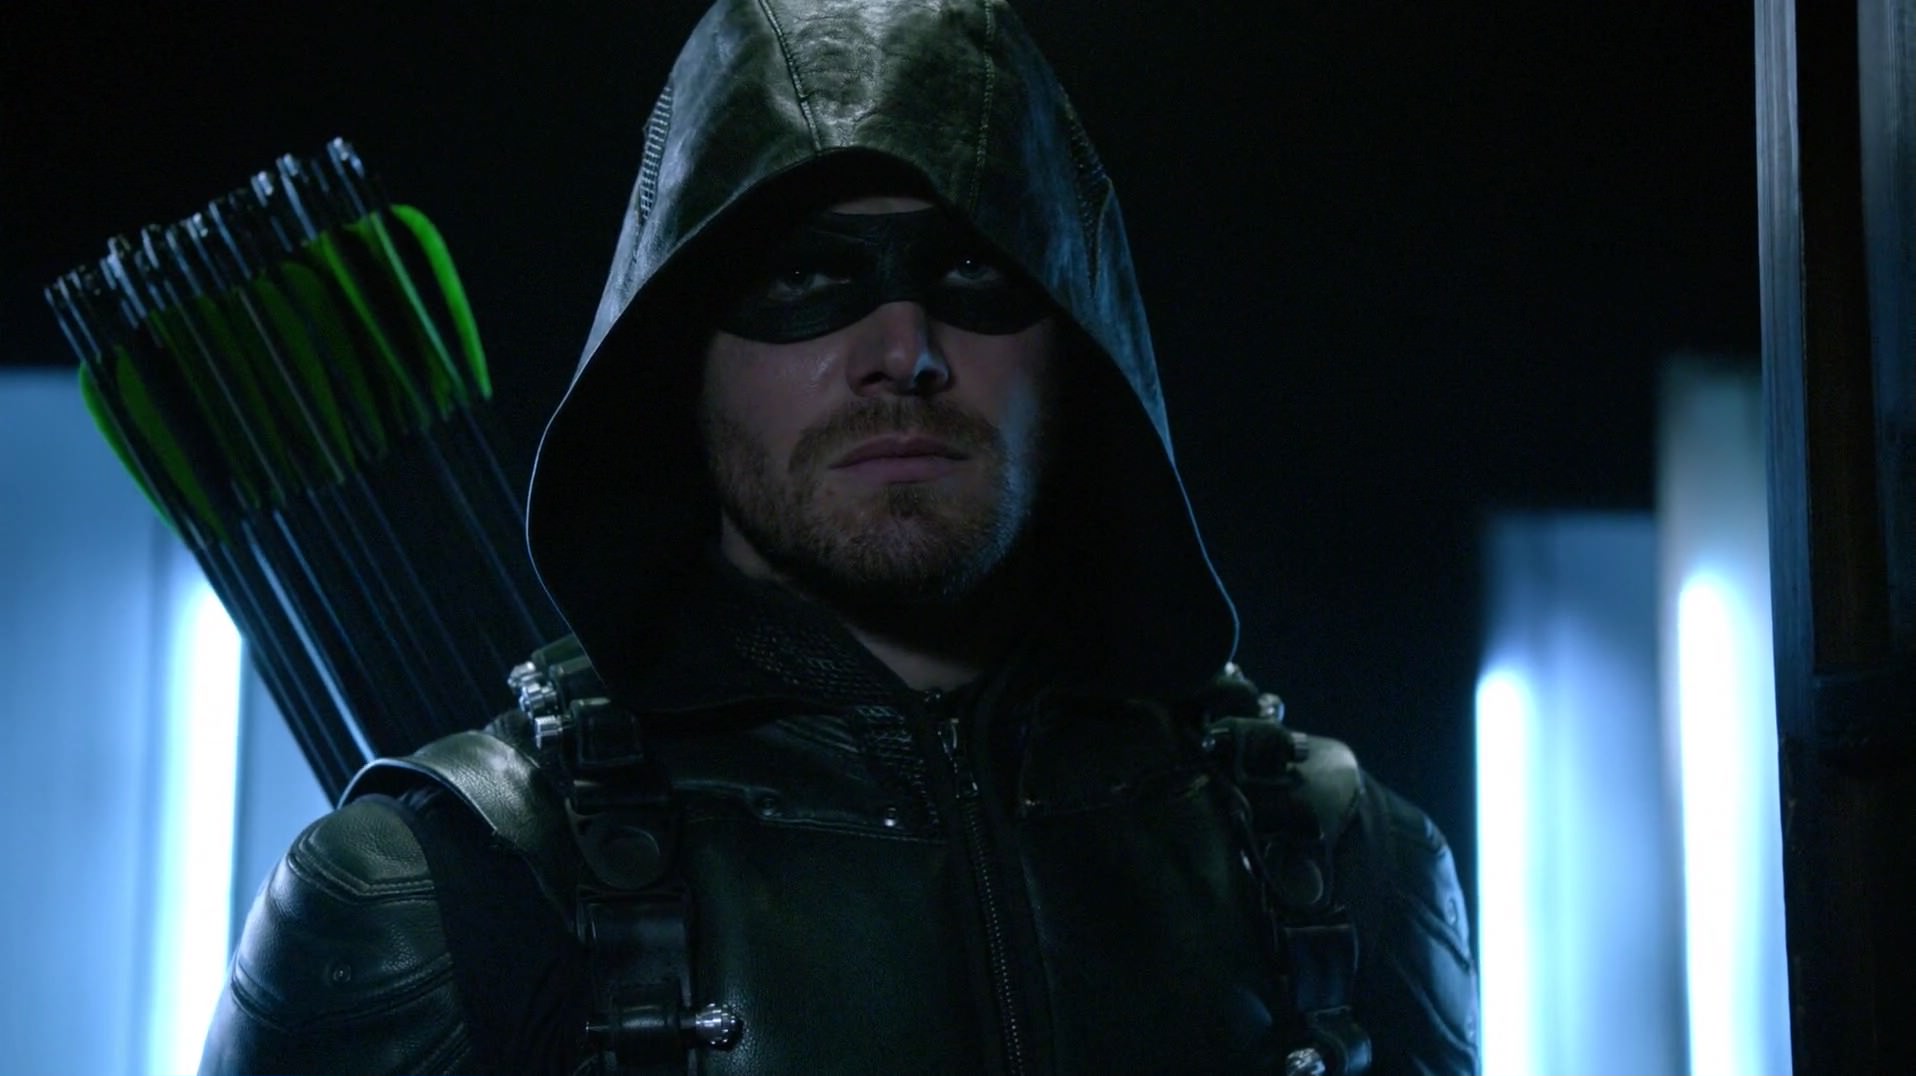 Arrow Episode 10 Recap: “For Better or For Worse”